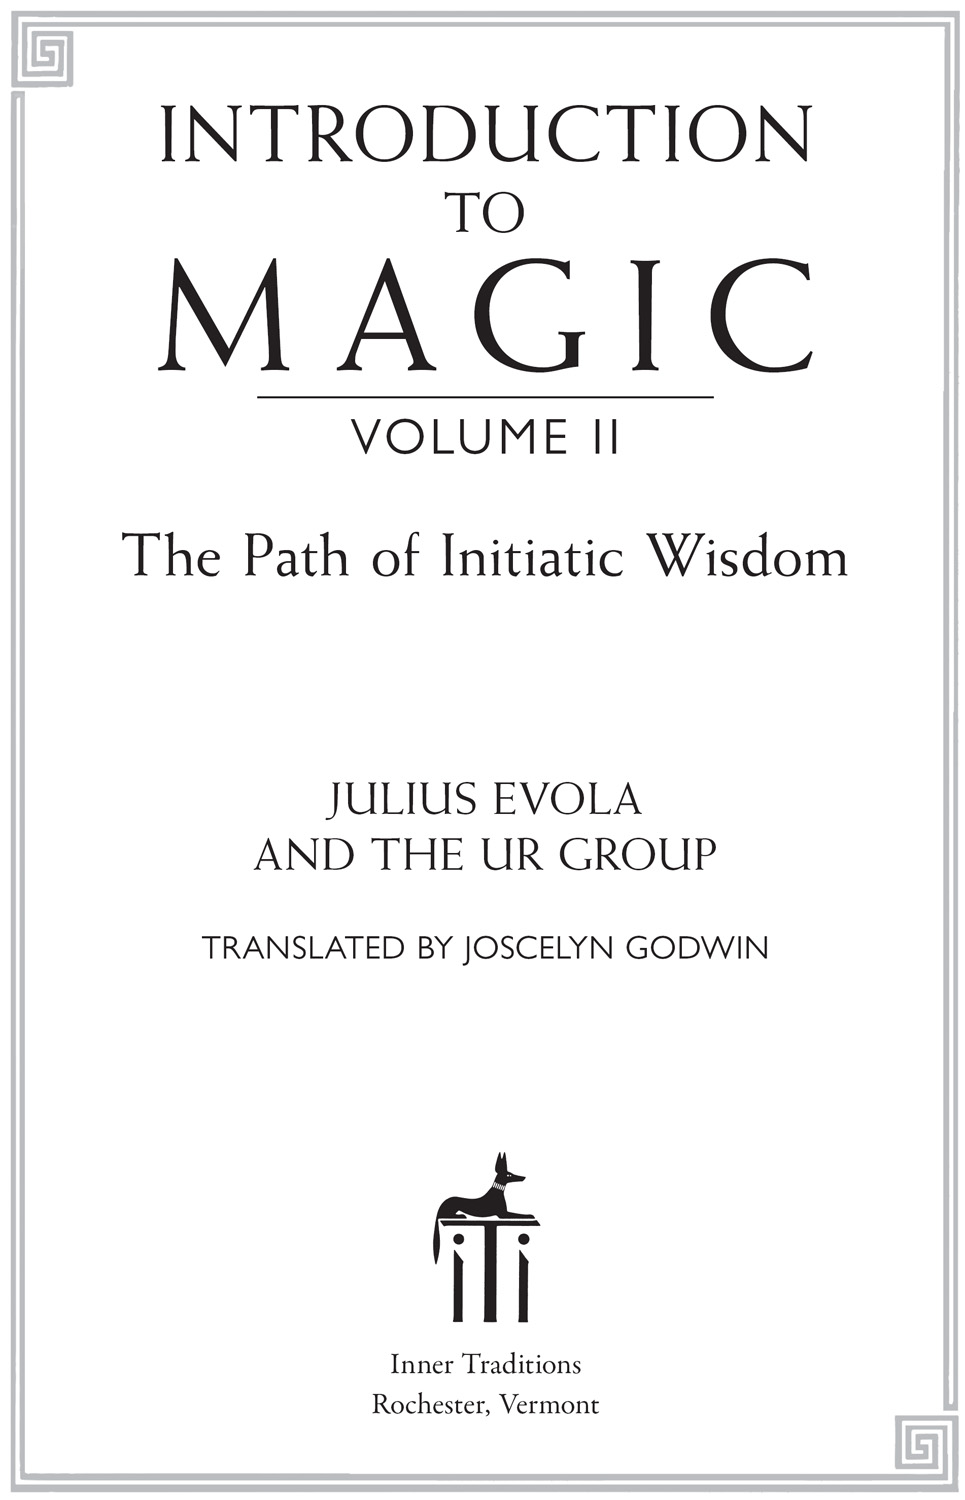 Introduction to Magic Volume II The Path of Initiatic Wisdom - image 2